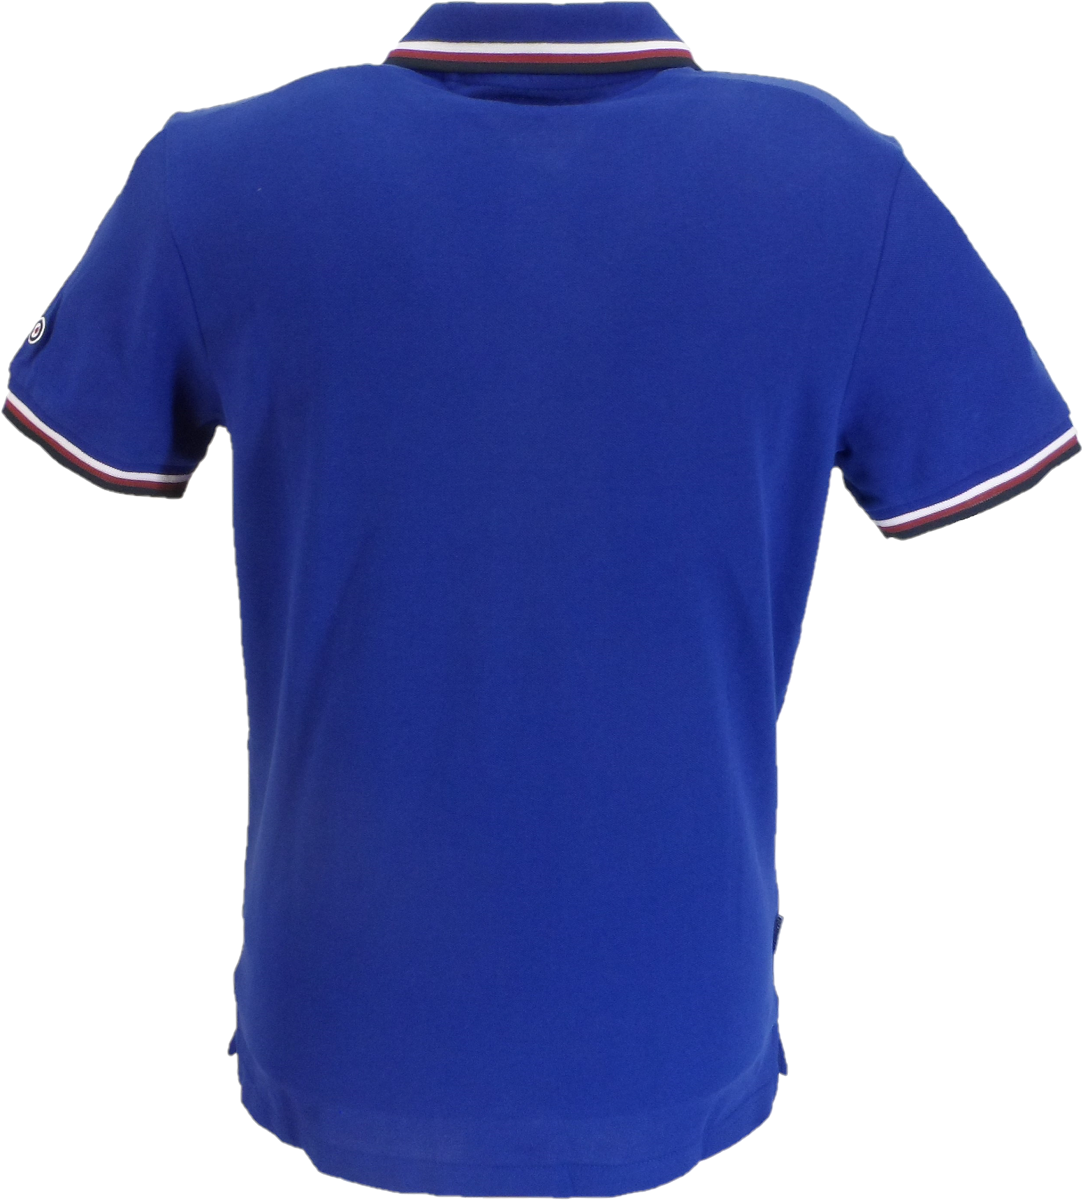 Lambretta Soda Blue Retro Target Logo 100% Cotton Polo Shirts